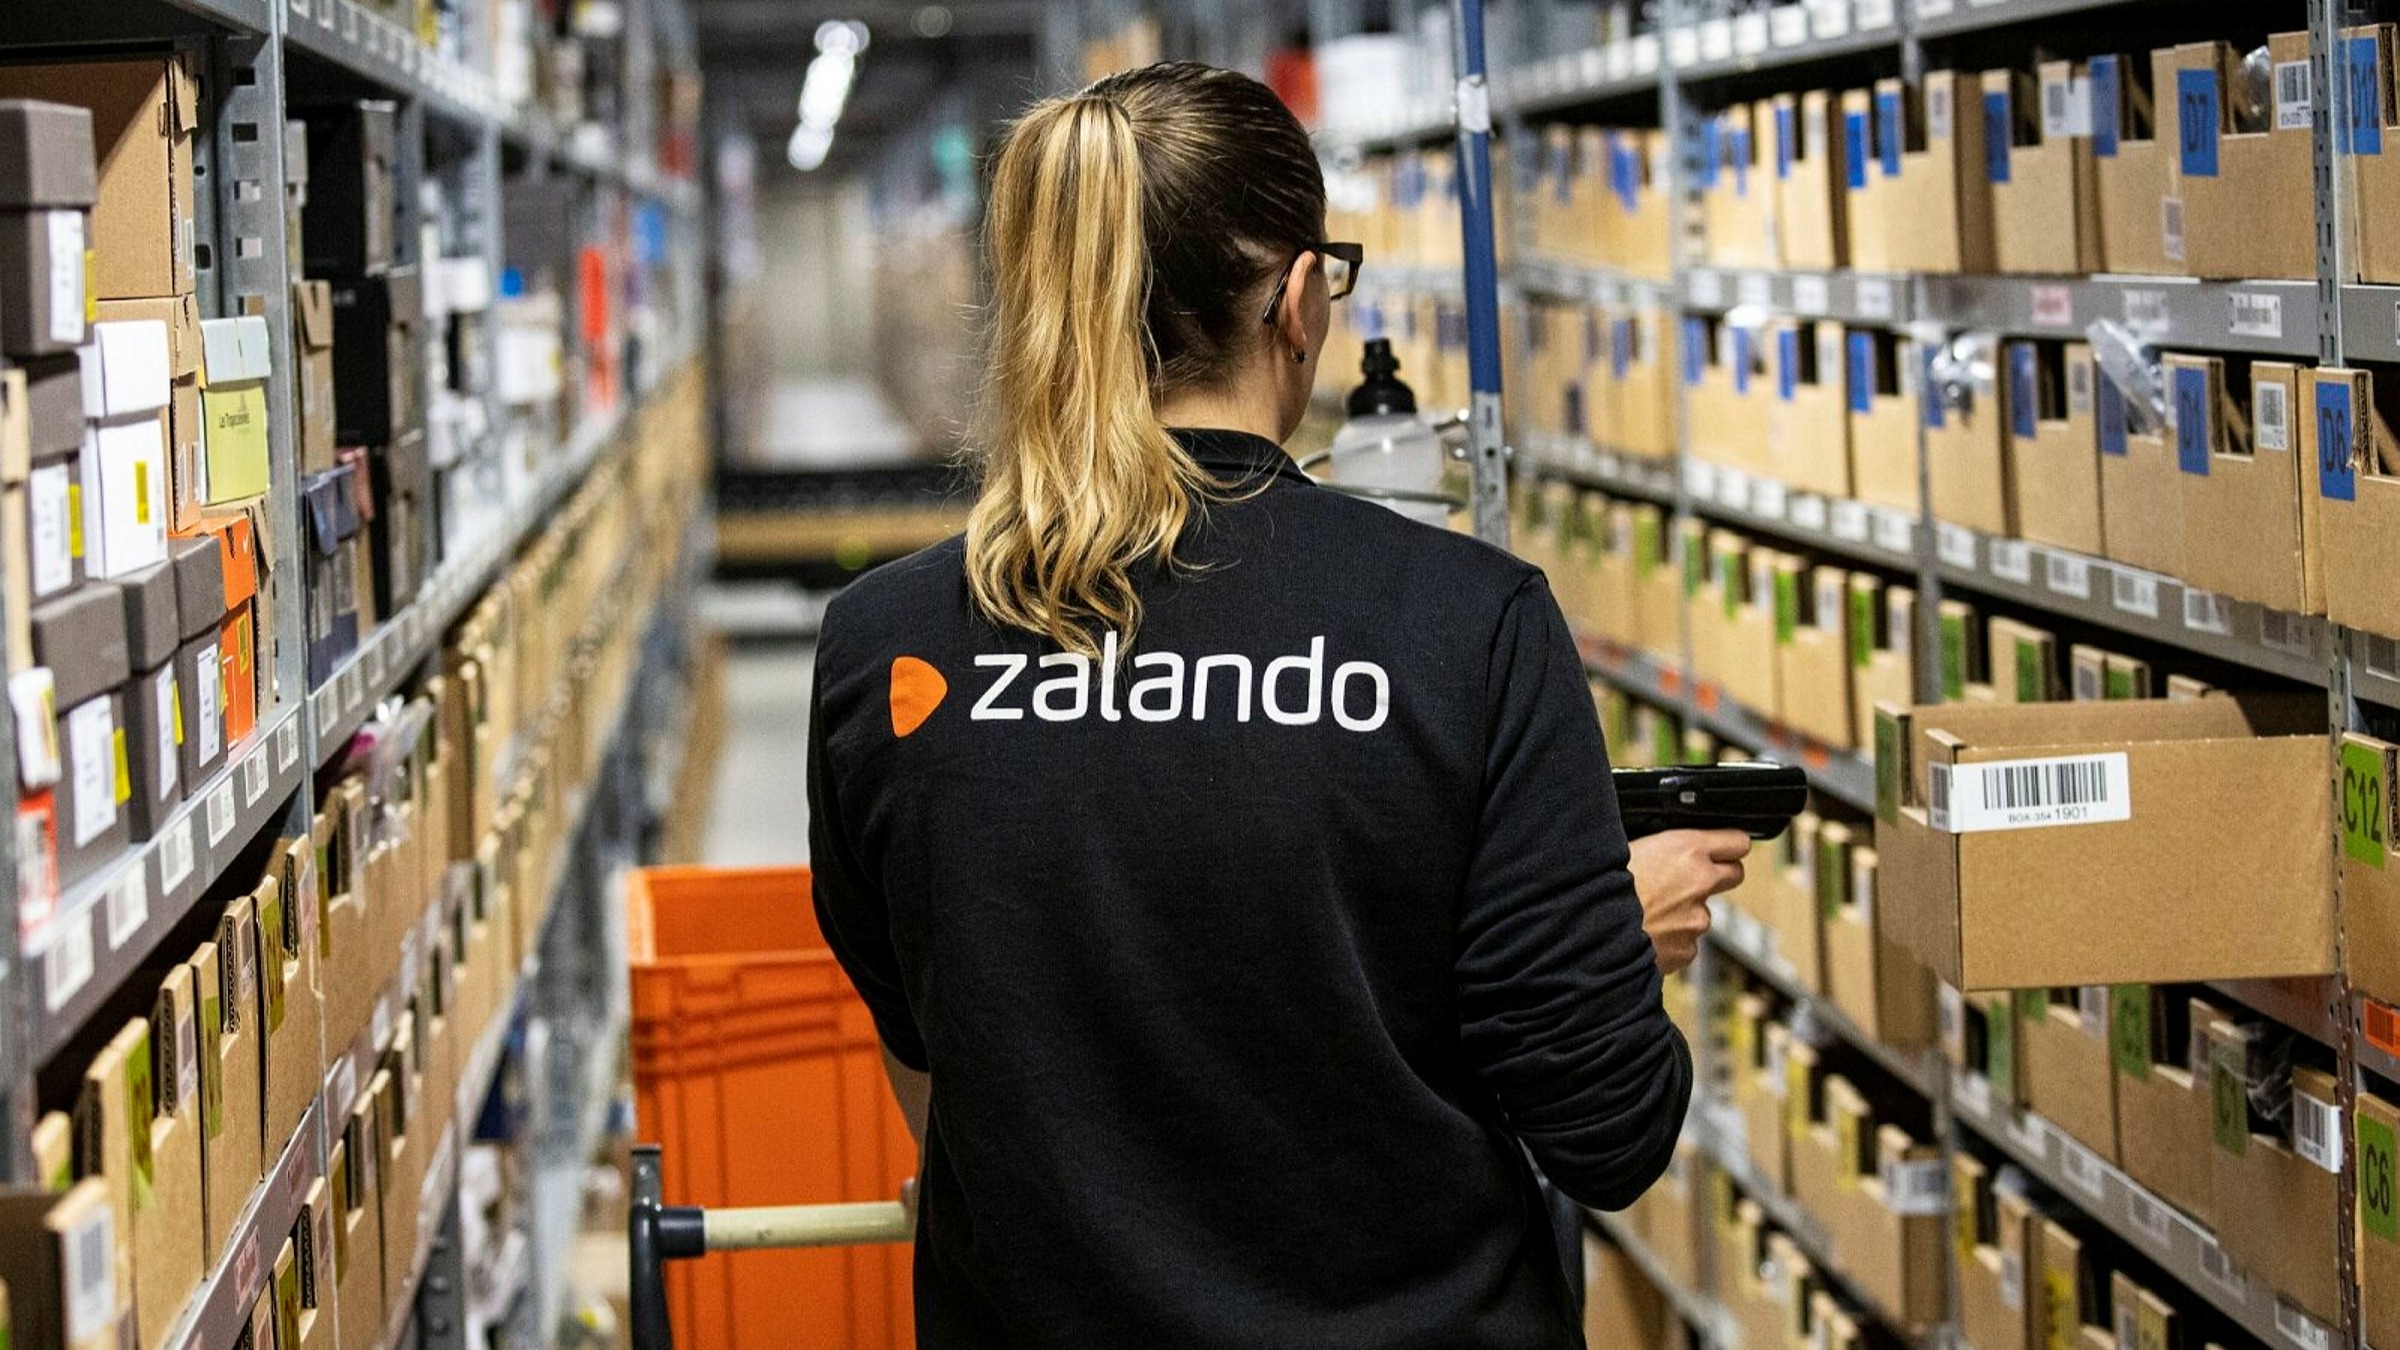 German Fashion Retailer Zalando to Reduce Workforce by up to 5%